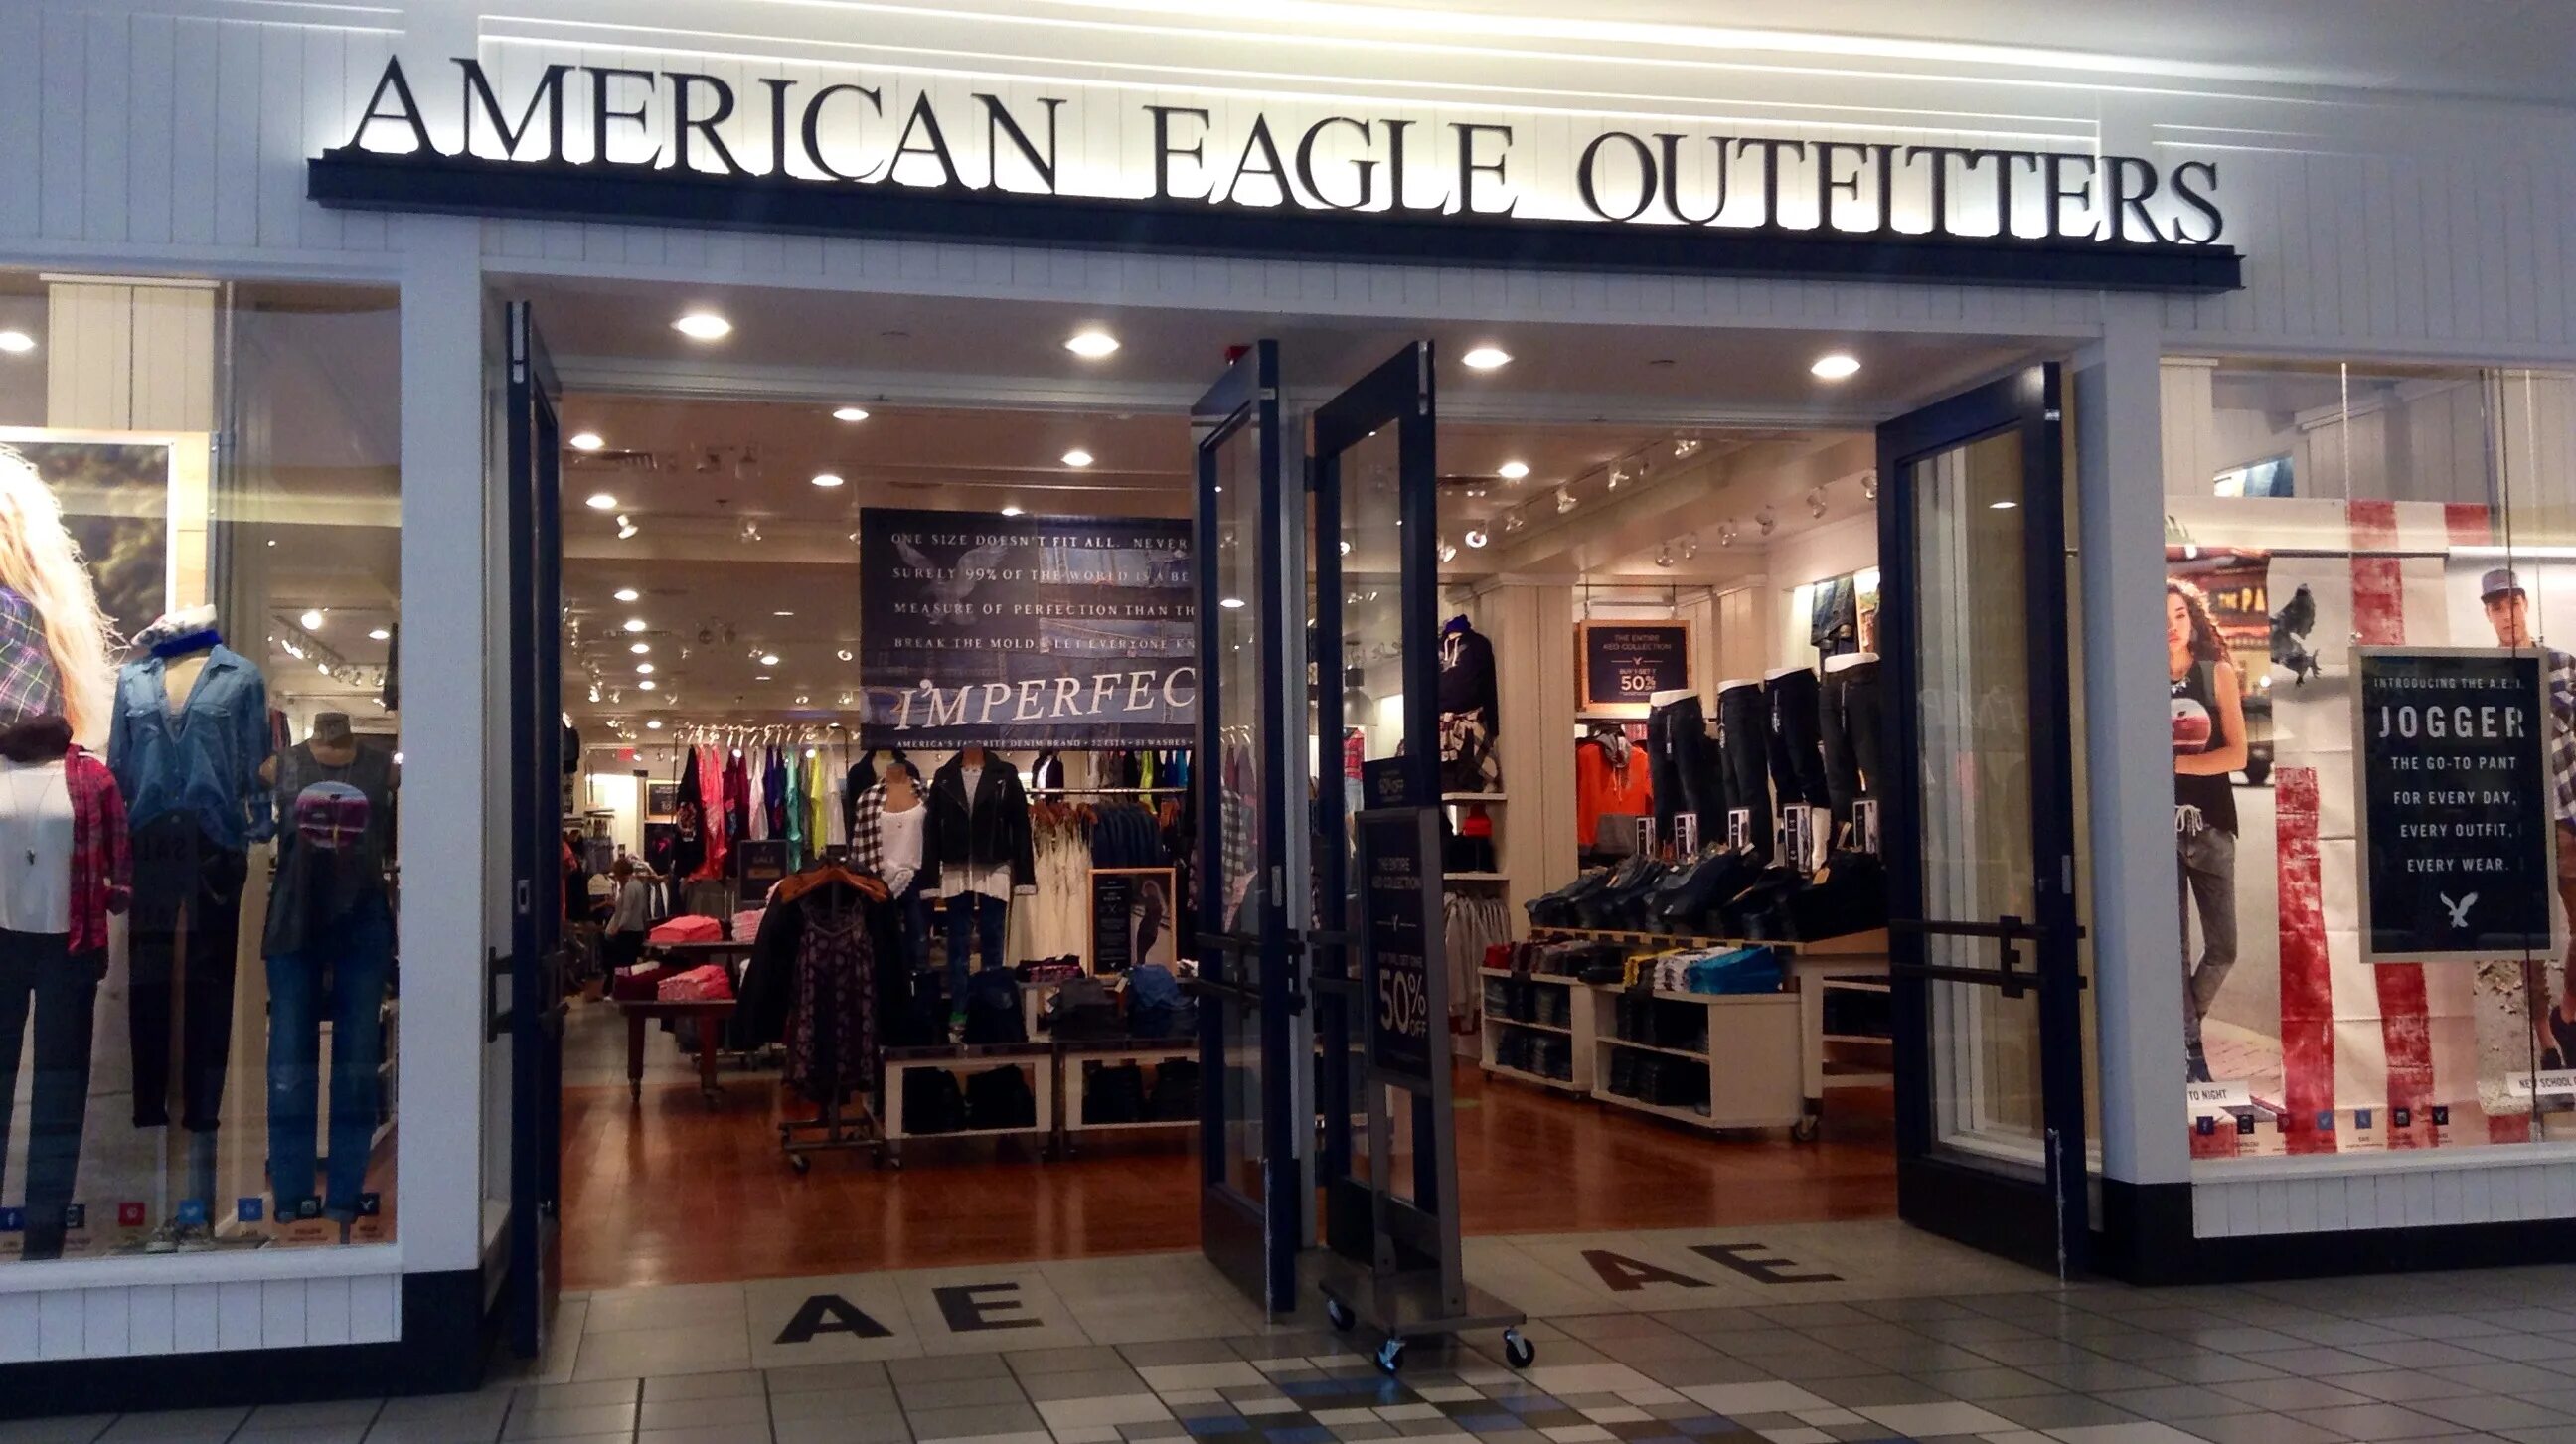 Американ игл. American Eagle Outfitters одежда. American Eagle одежда Israel. Американ игл бренд. Американ игл одежда интернет магазин.